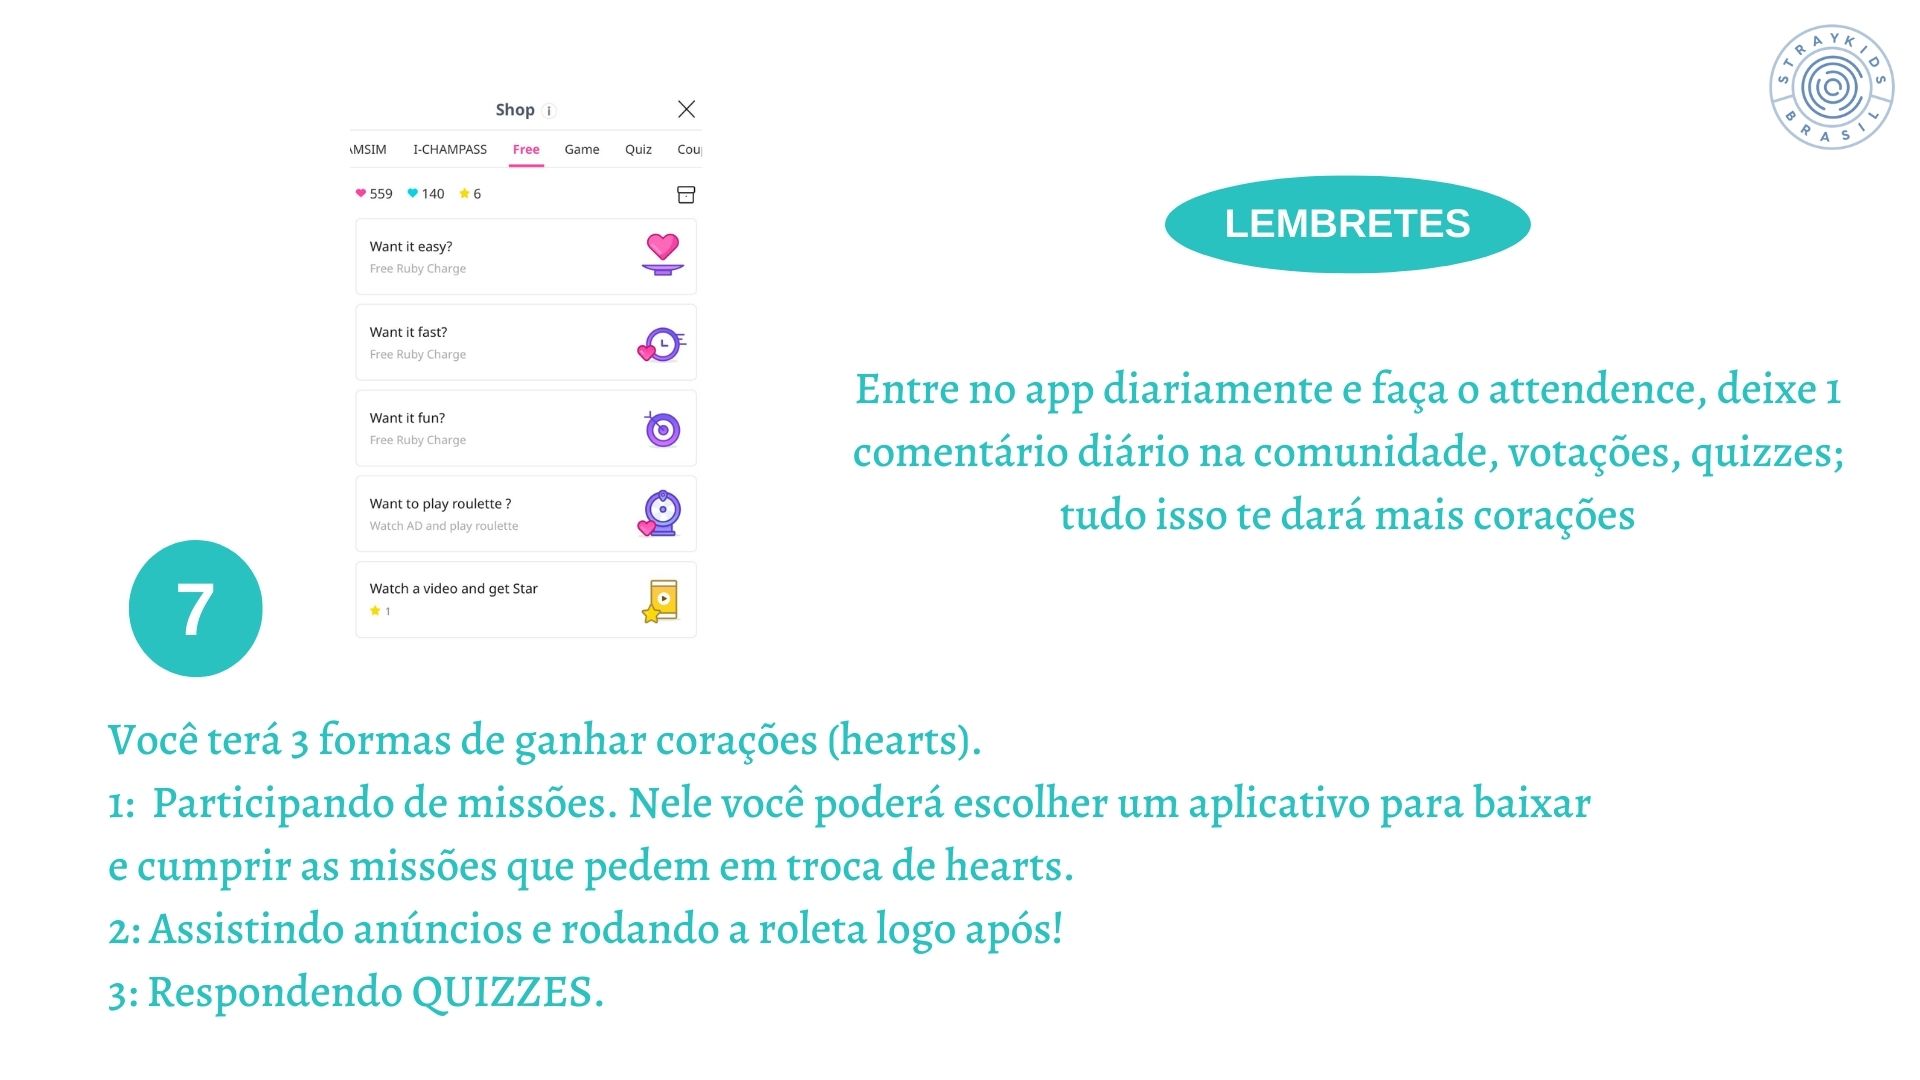 Quiz Brasil on the App Store